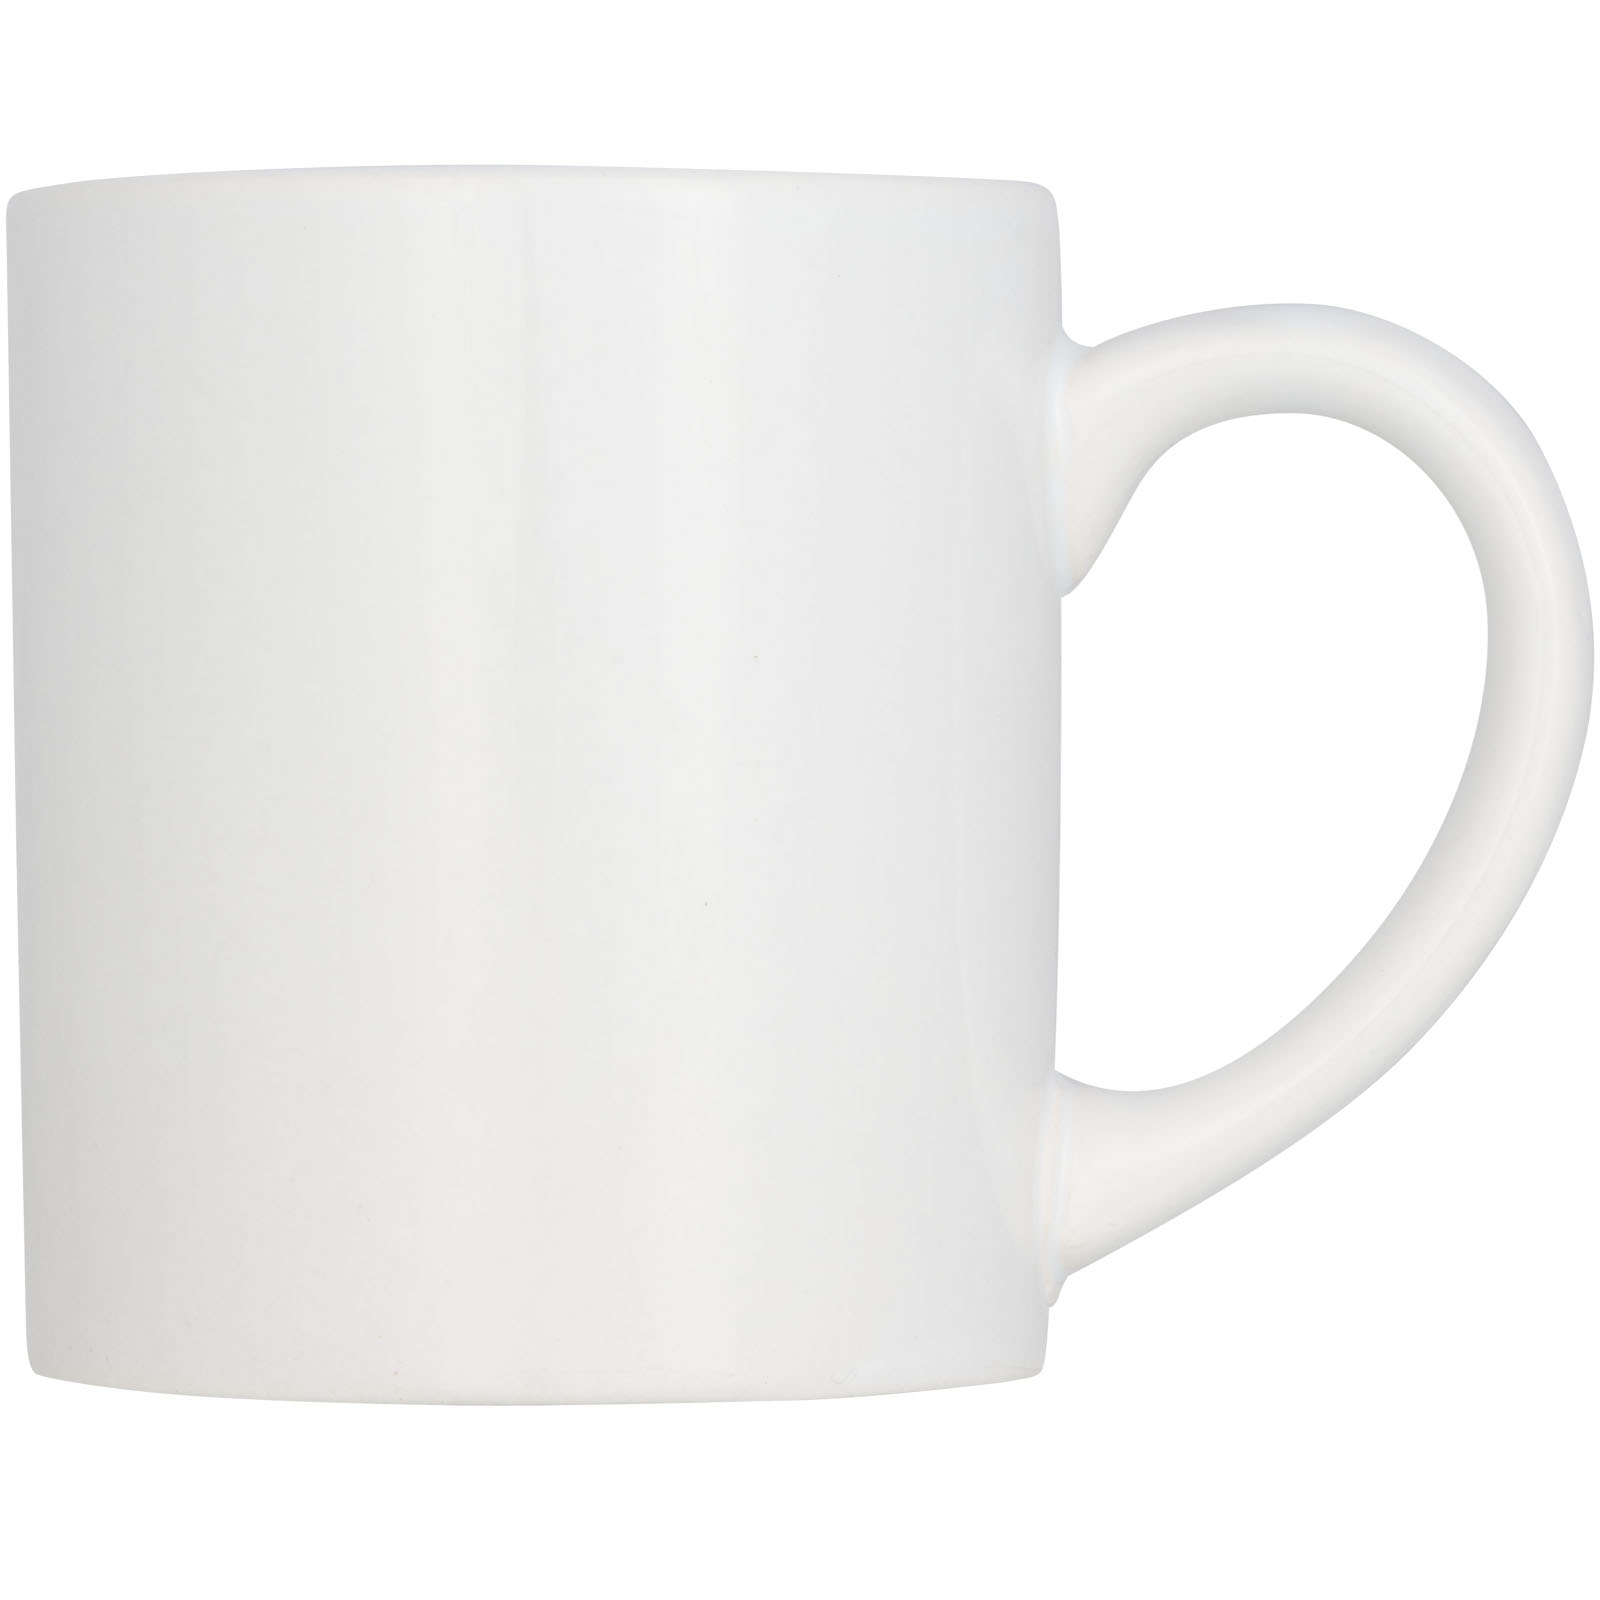 Advertising Standard mugs - Pixi 210 ml mini ceramic sublimation mug - 2